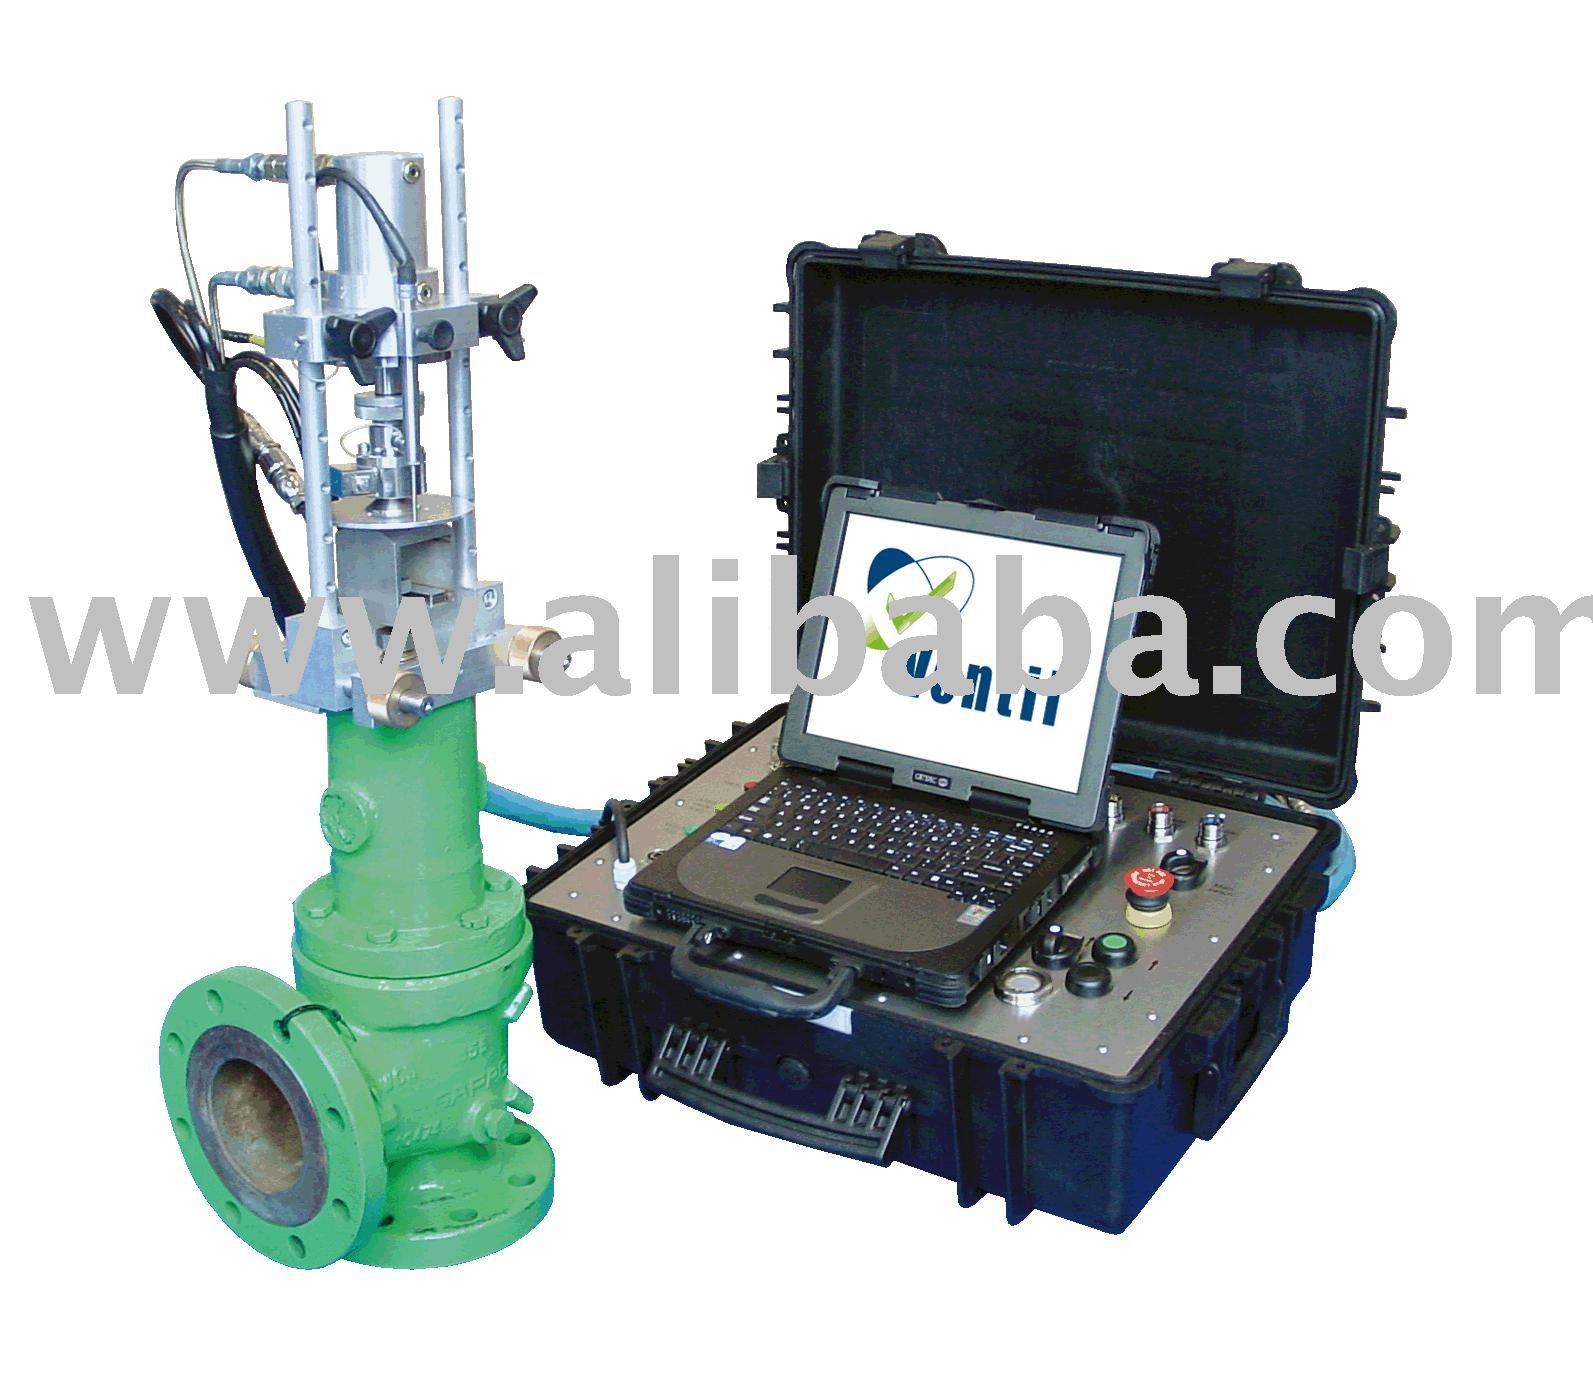 Ventil valve testing equipment